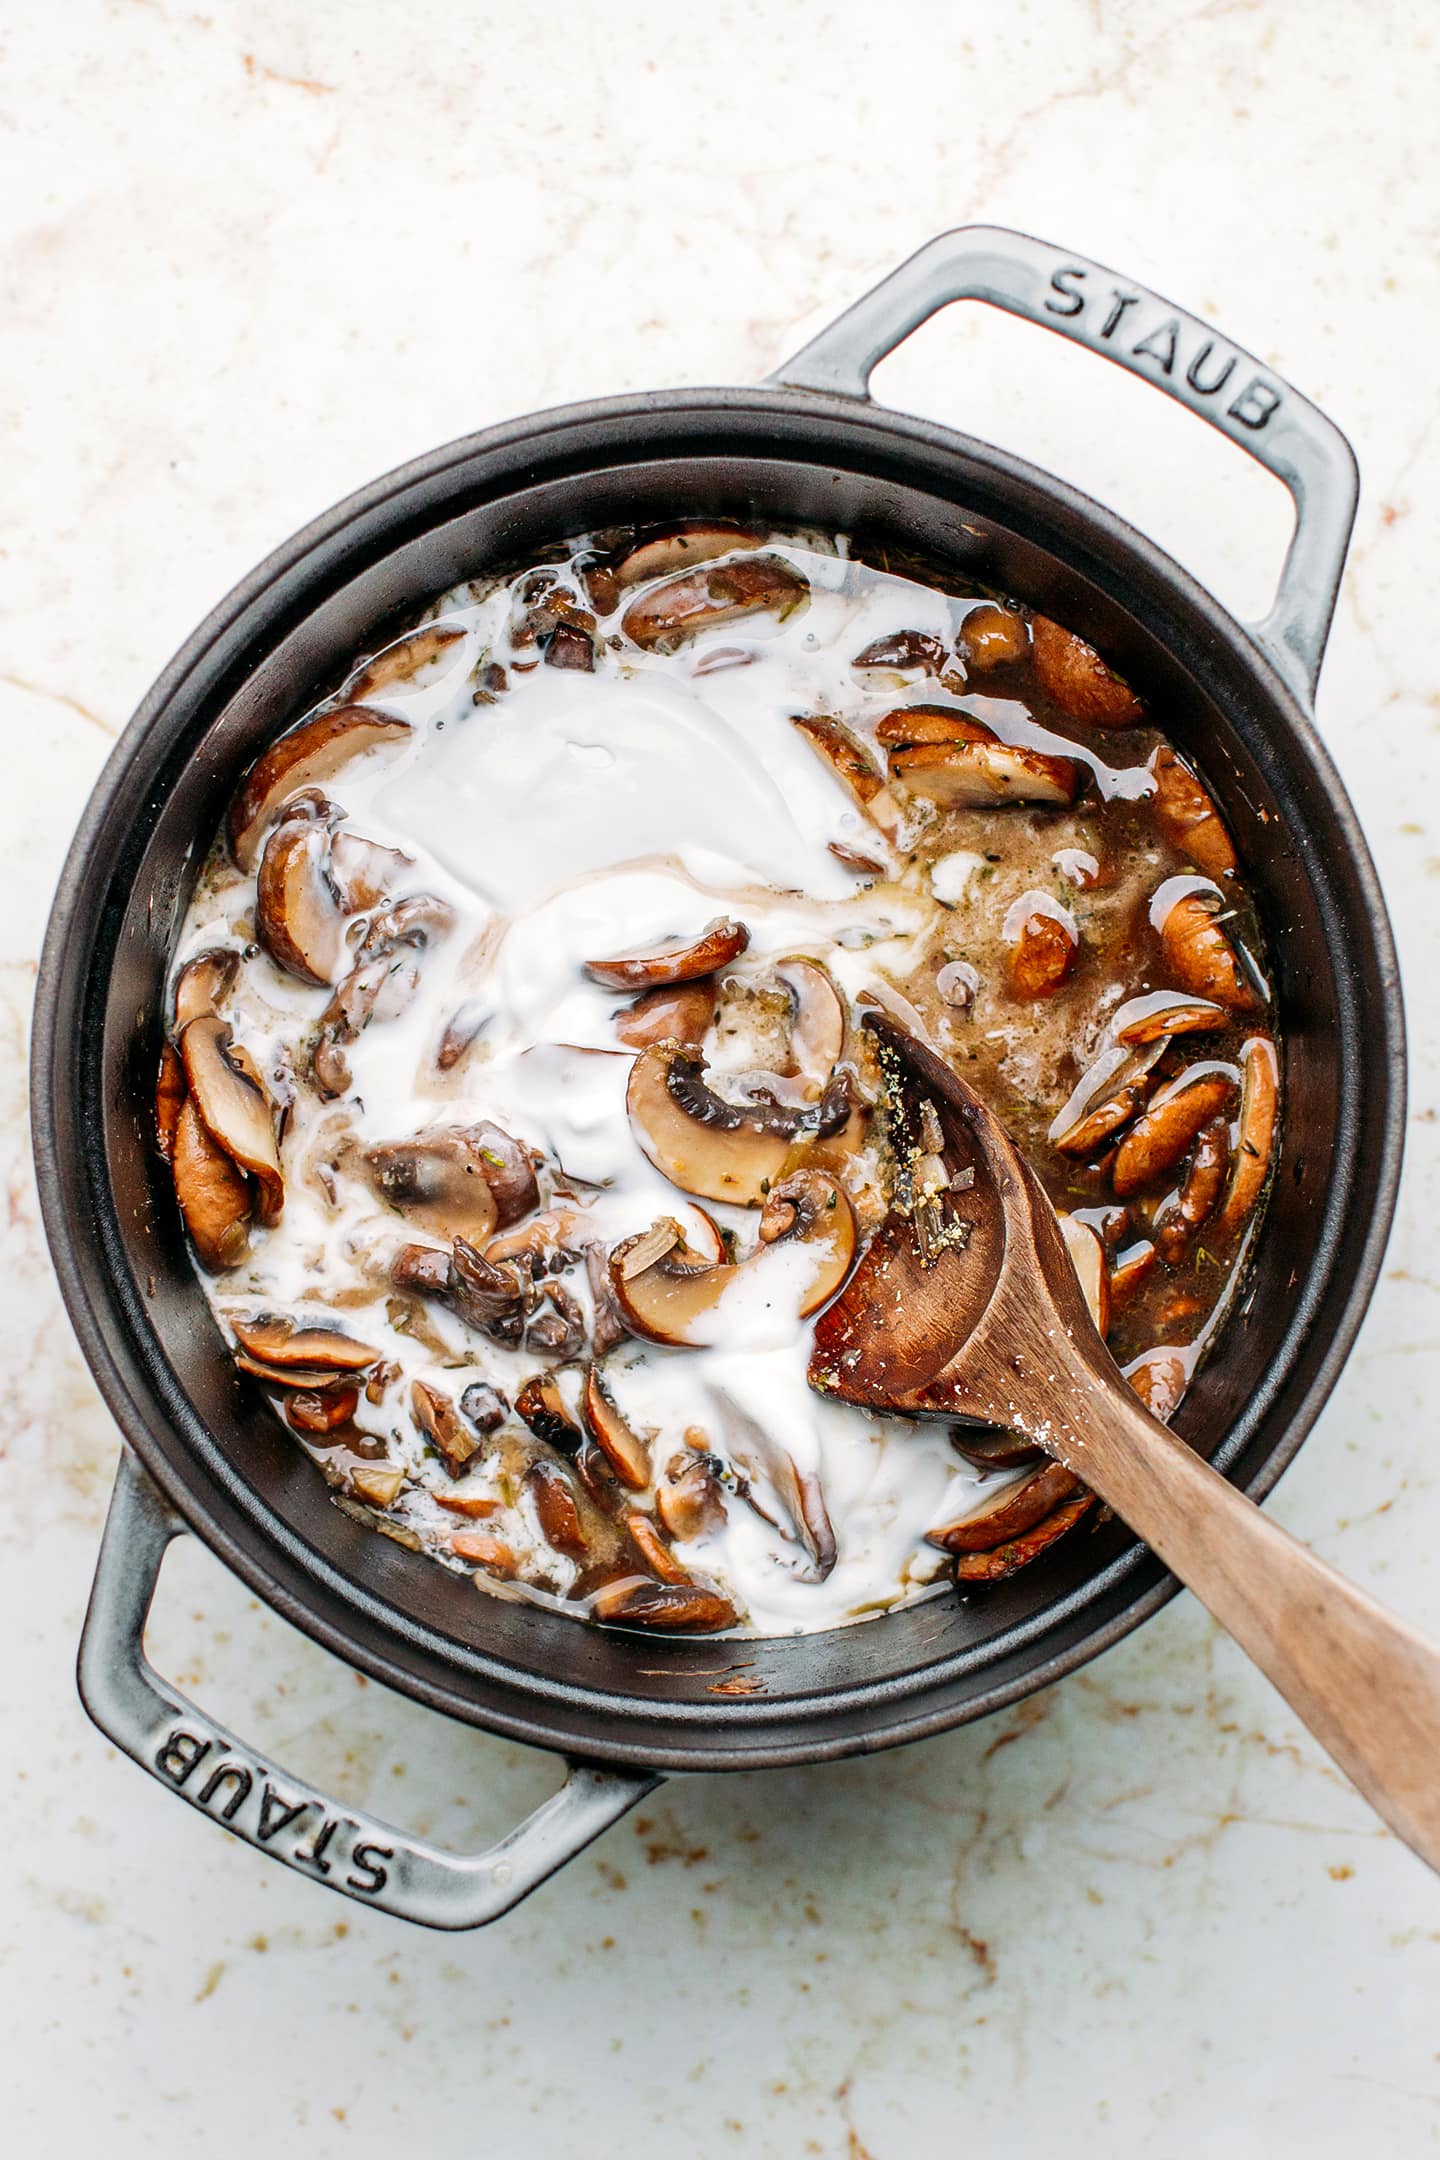 Sautéed mushrooms and coconut milk in a pot.